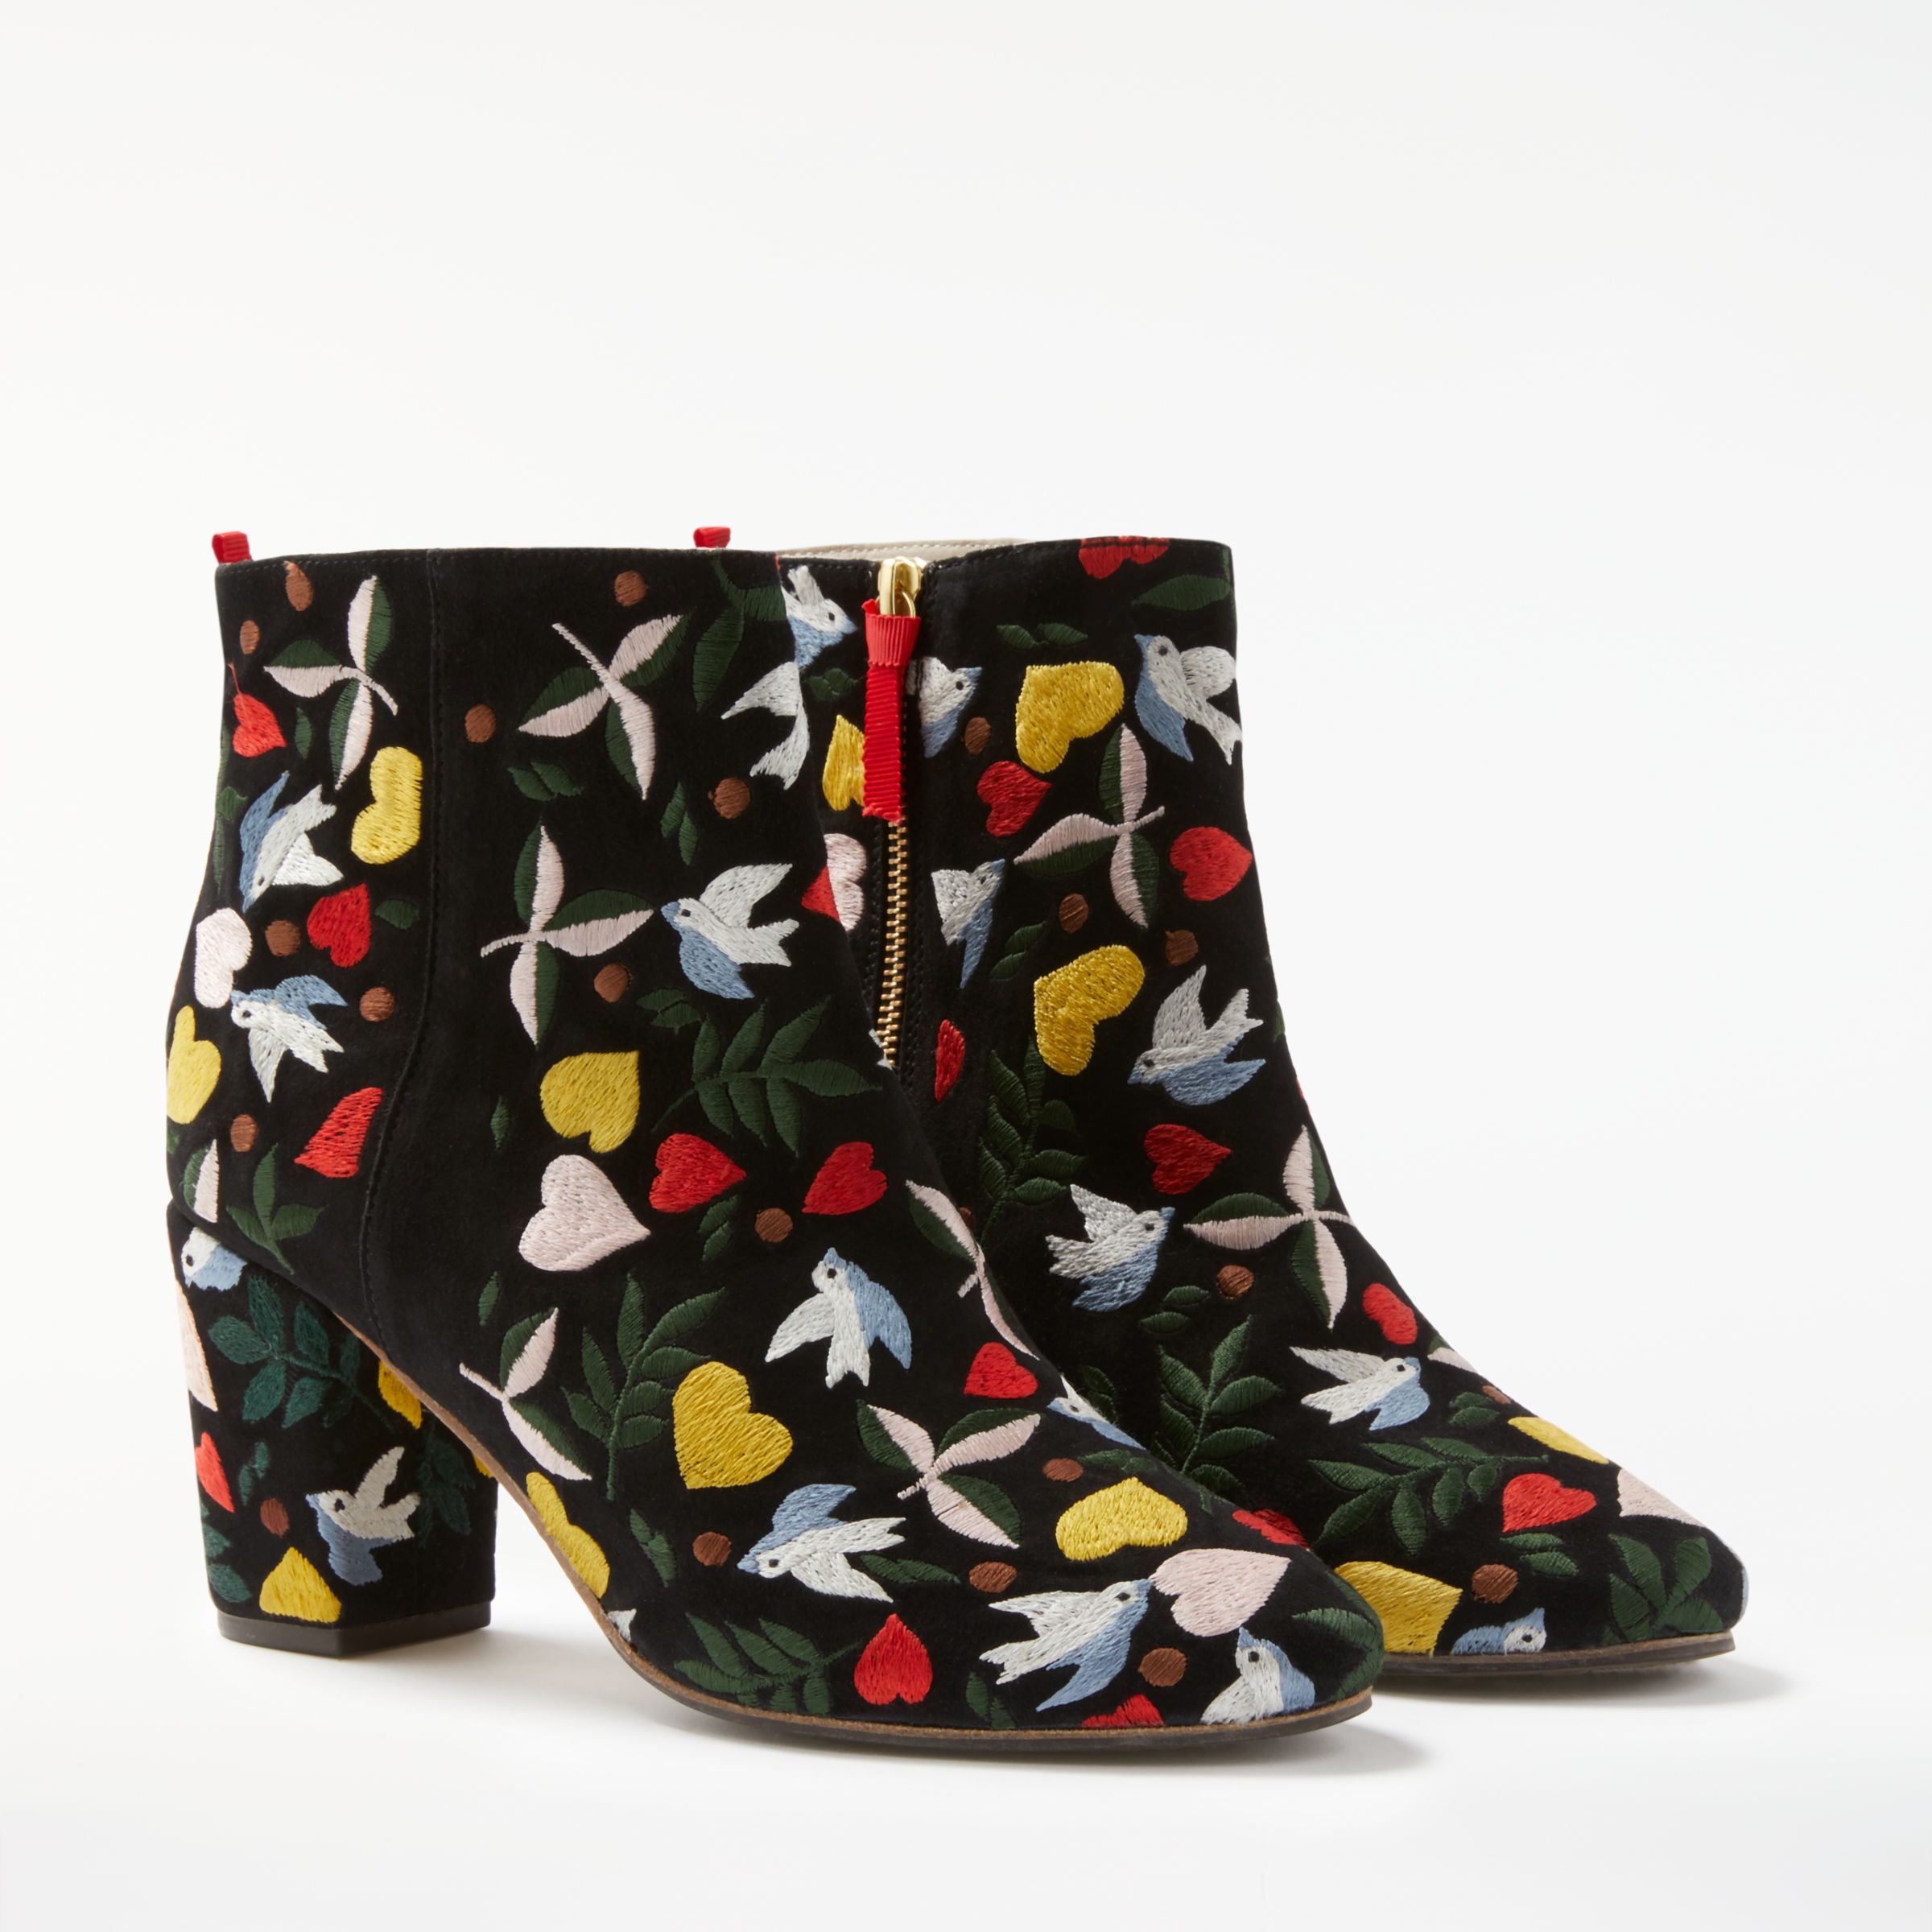 Boden Folk Embroidered Block Heeled Ankle Boots, Black